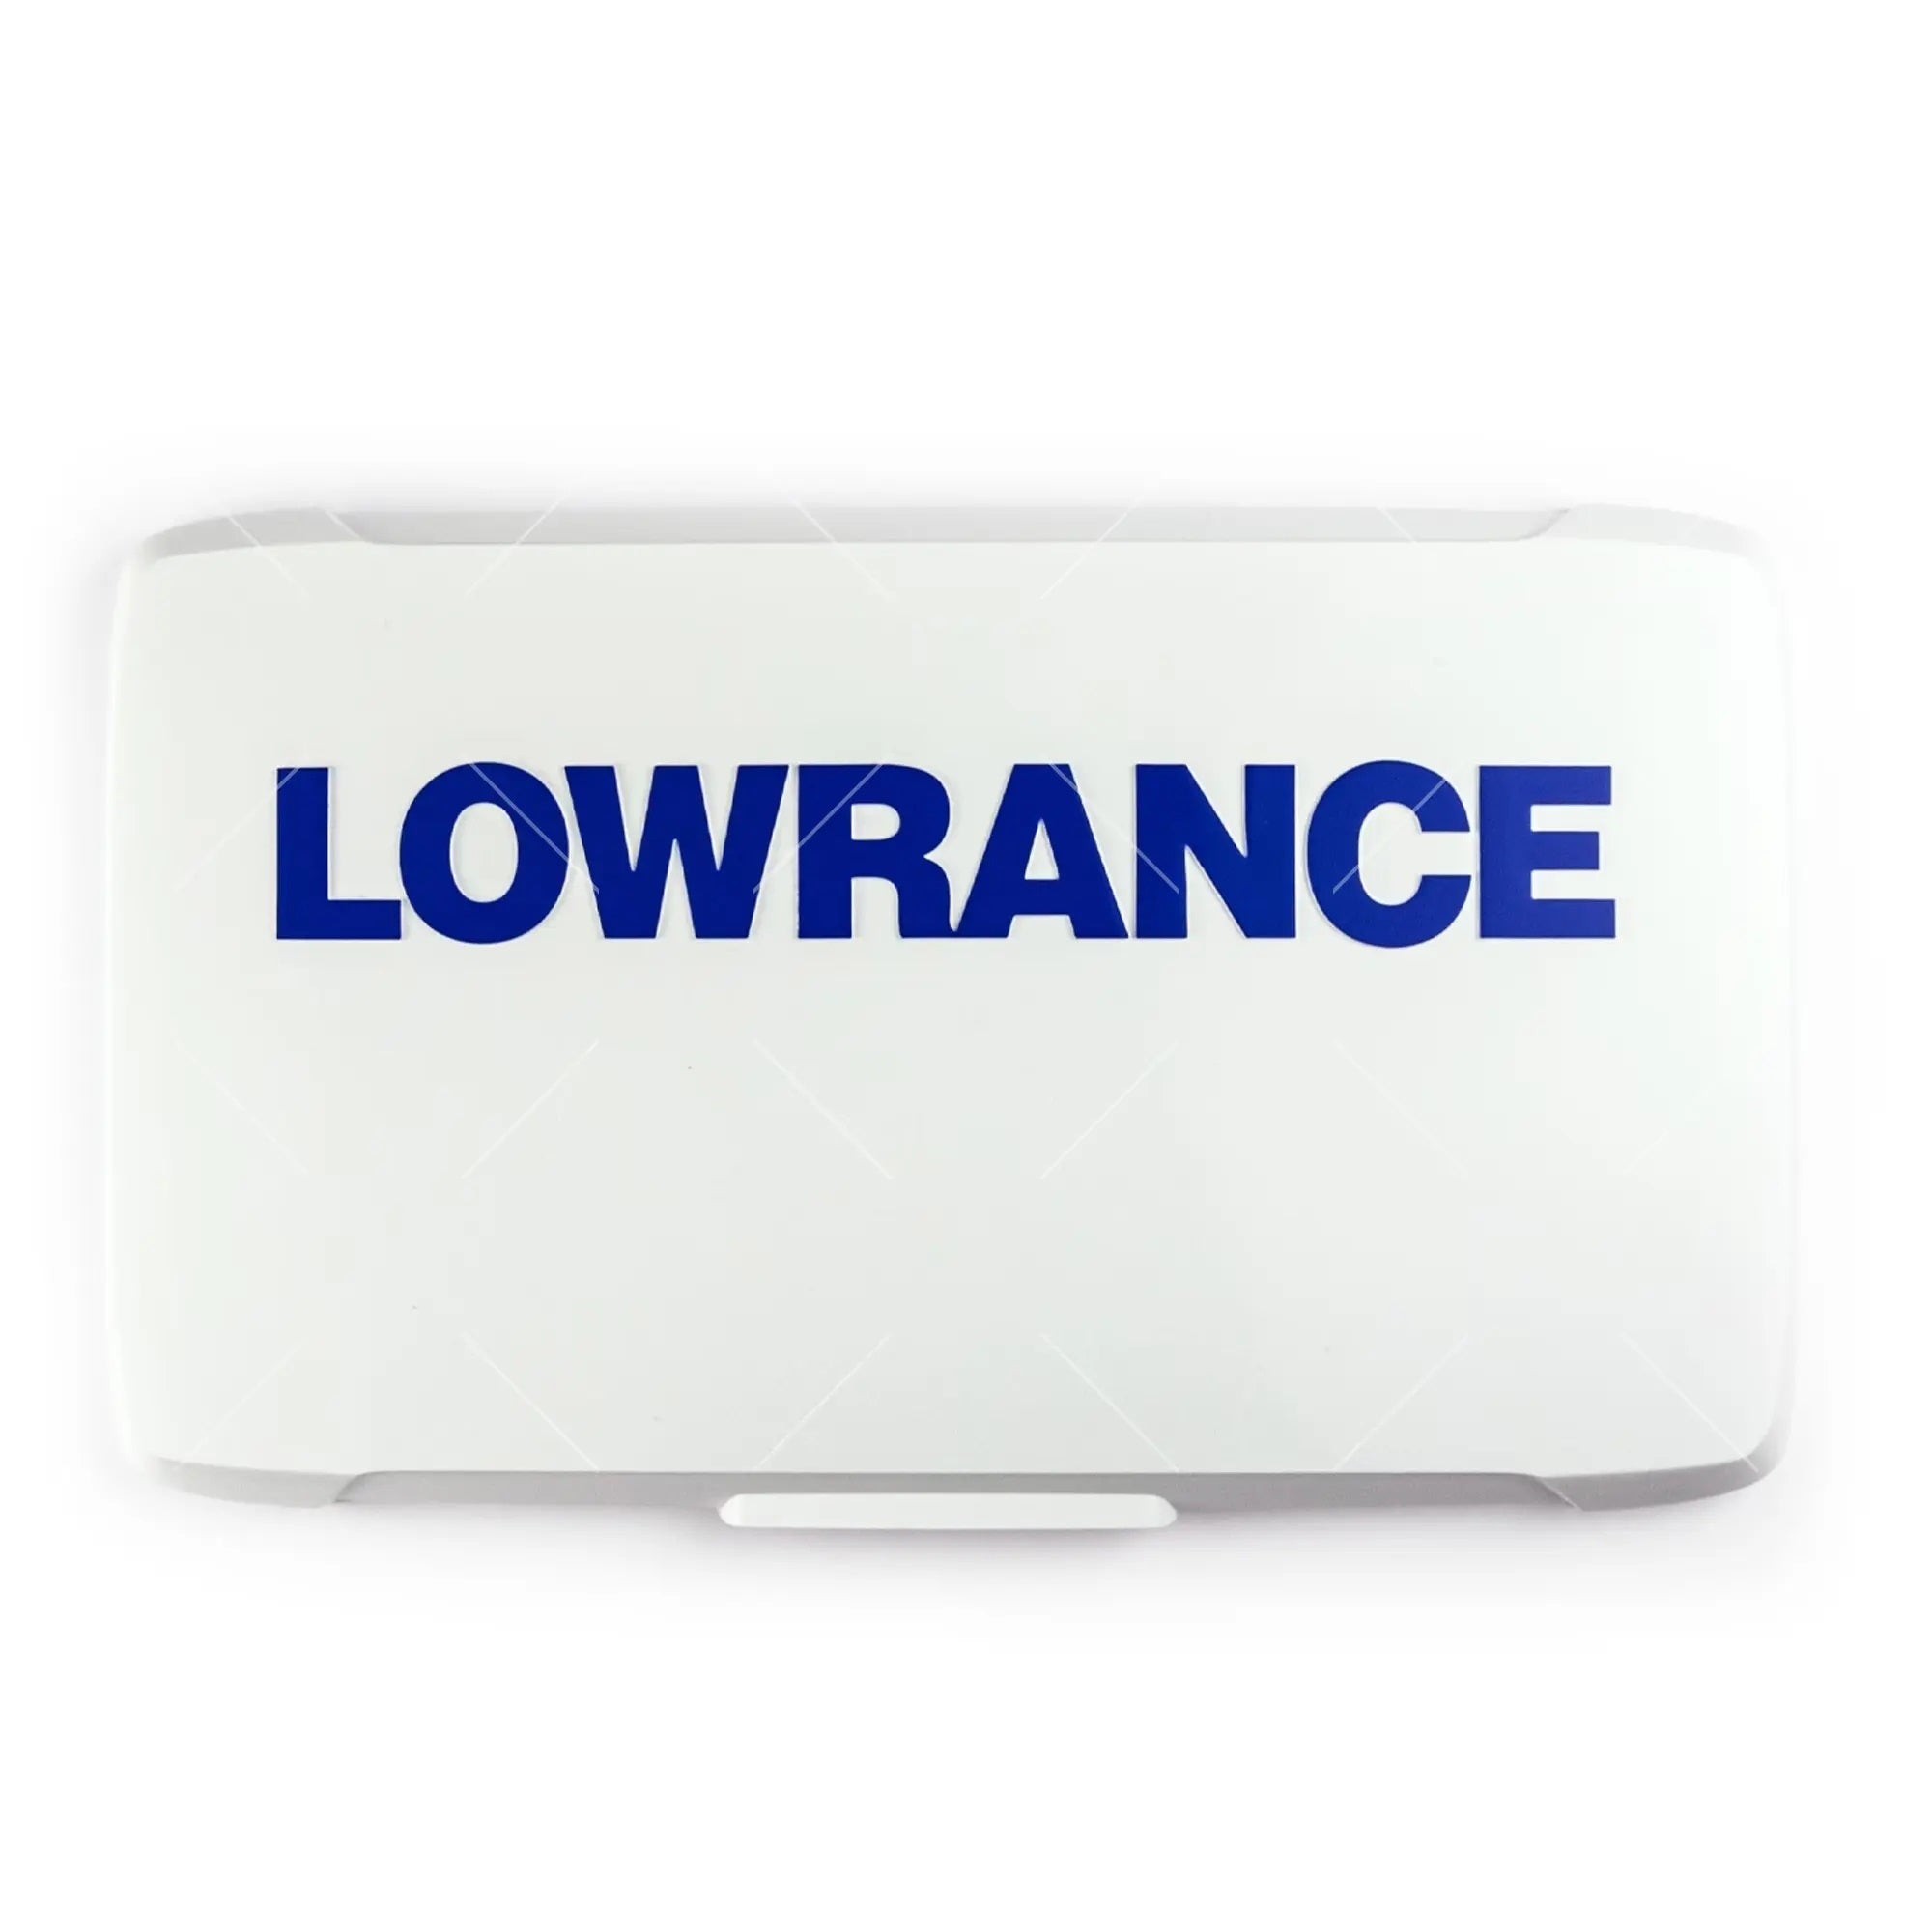 000-16251-001,Lowrance